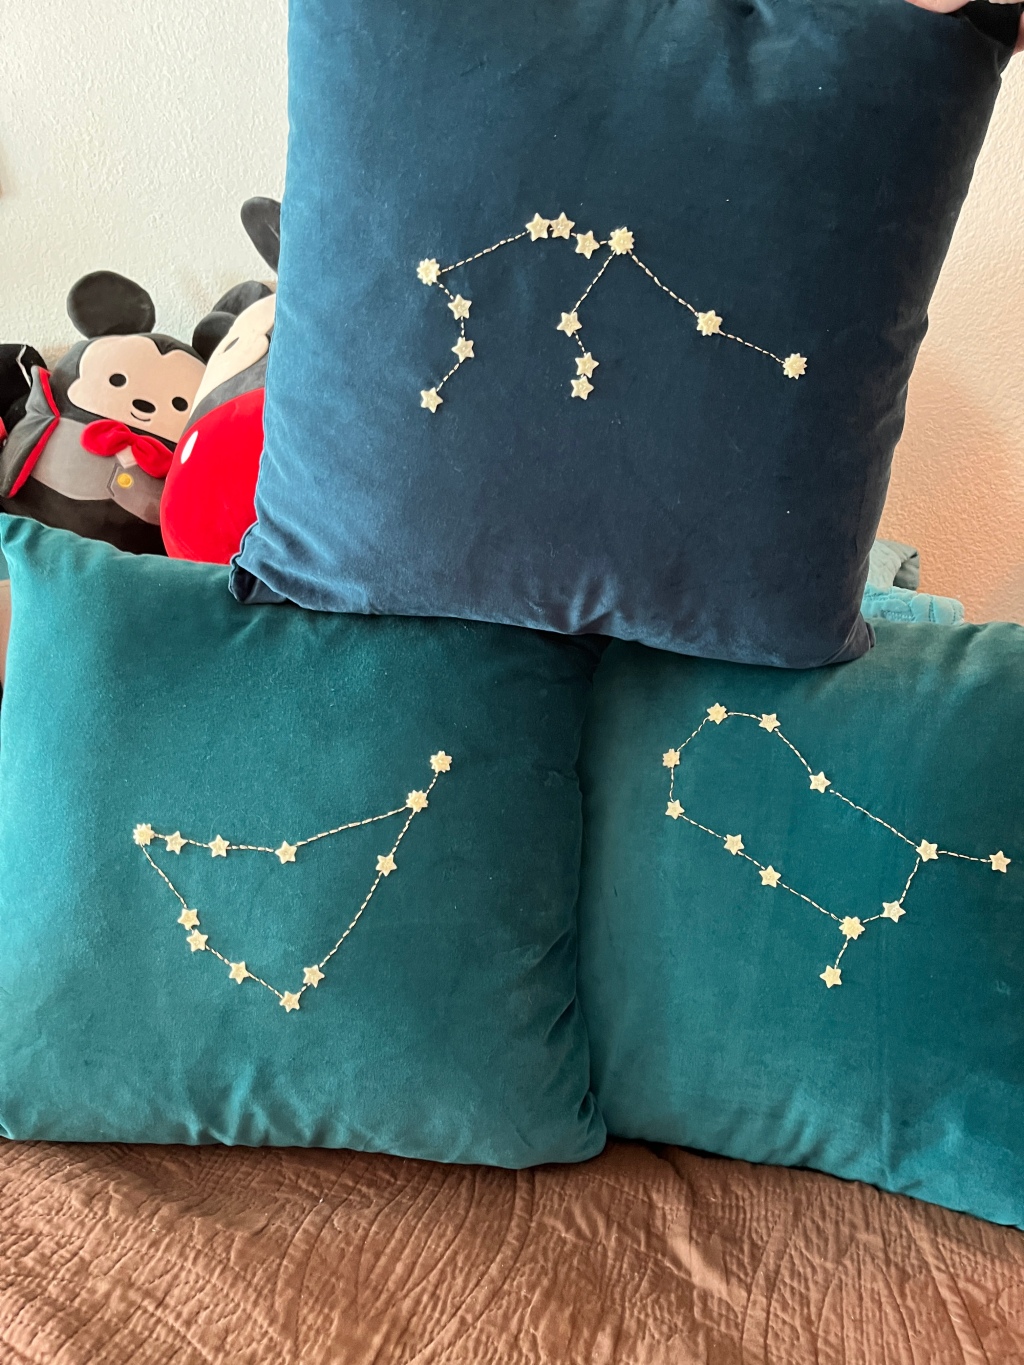 Zodiac Constellation Pillows